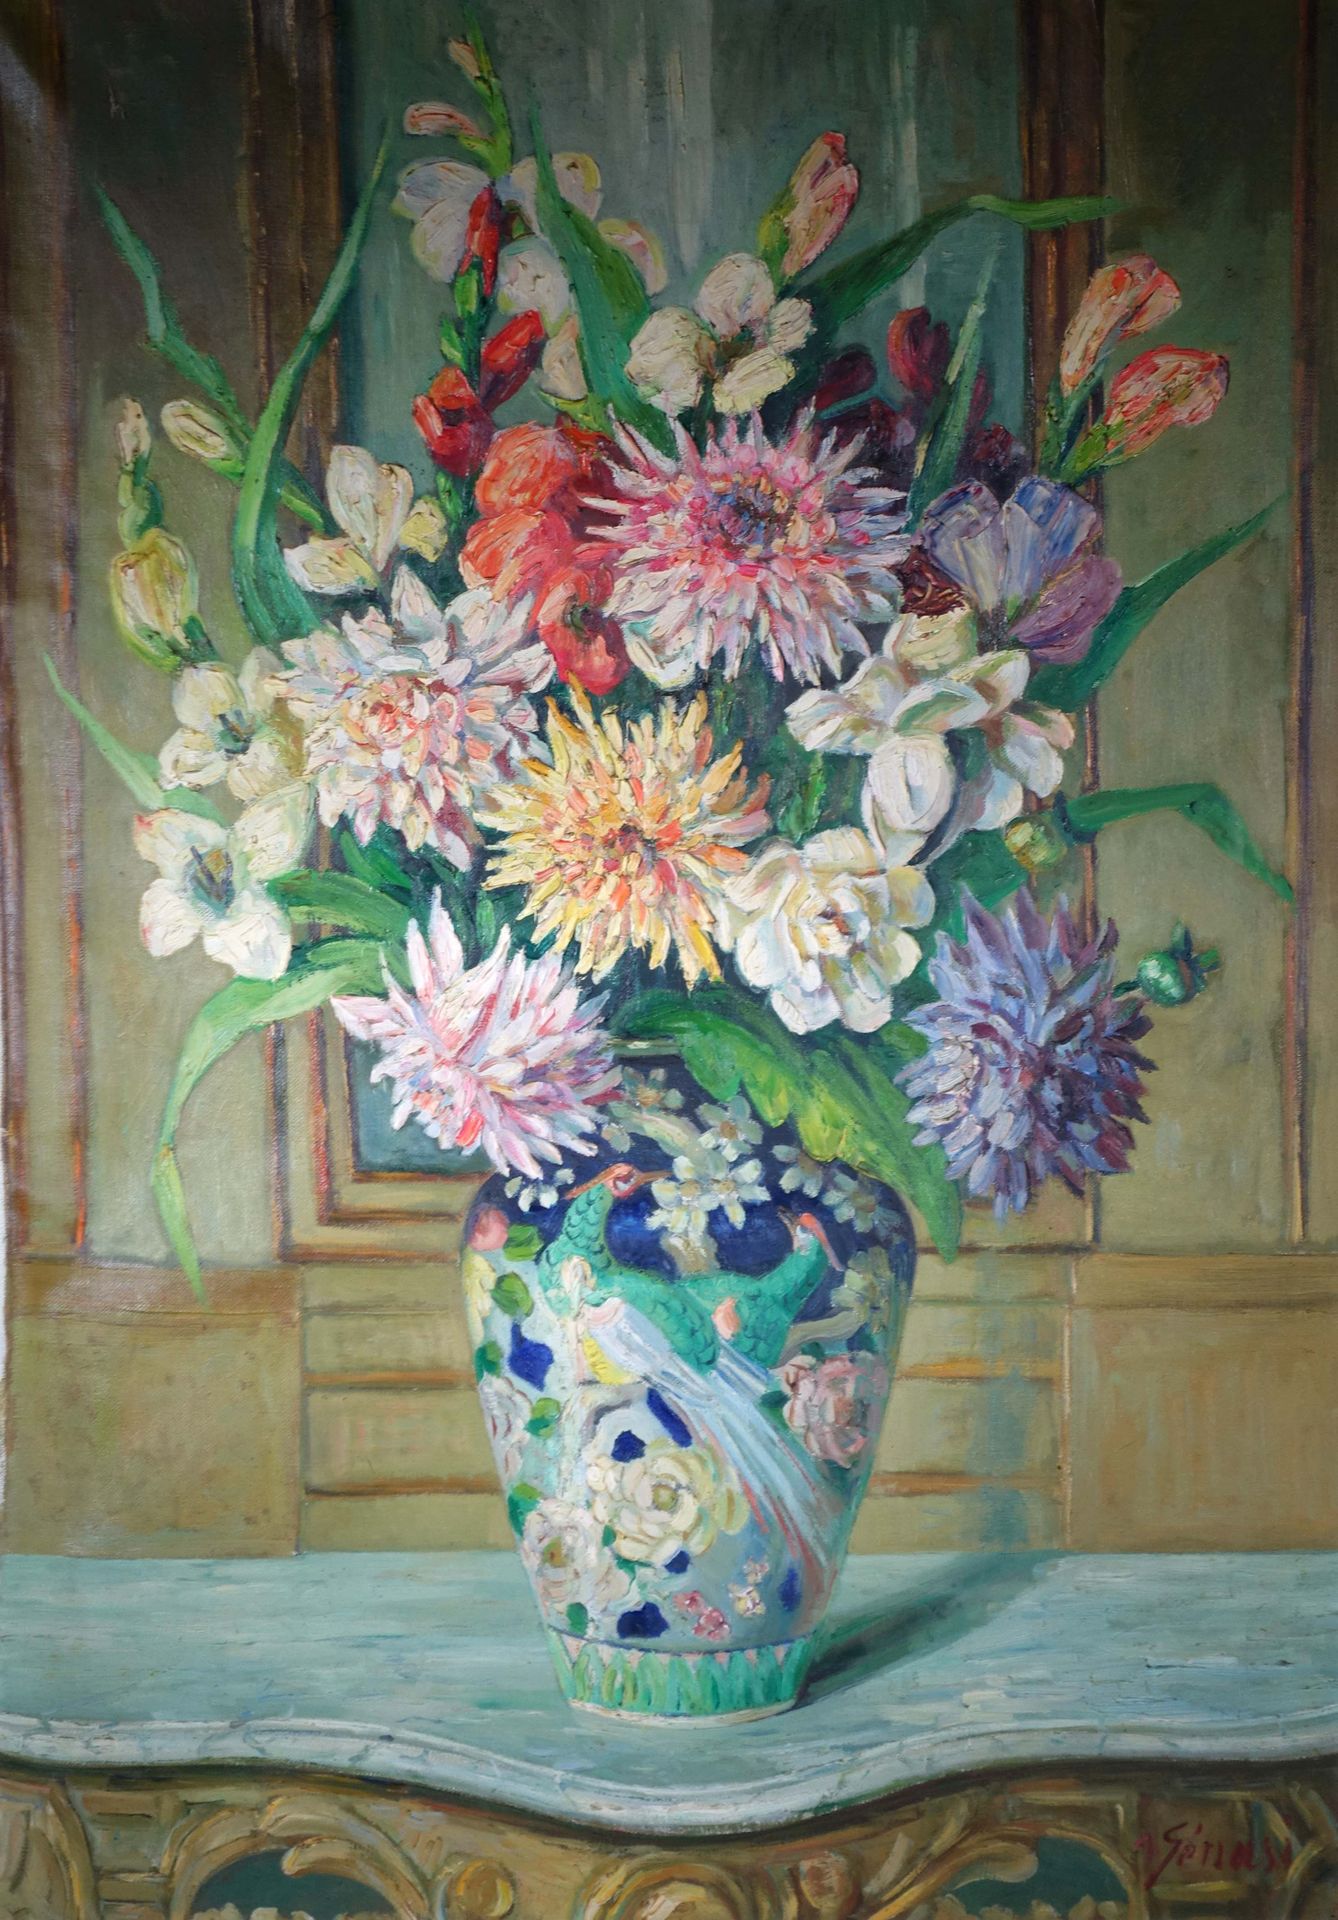 Null A. GENASI (siglo XX)
Manojo de flores
Óleo sobre lienzo.
94 x 65 cm
Marco d&hellip;